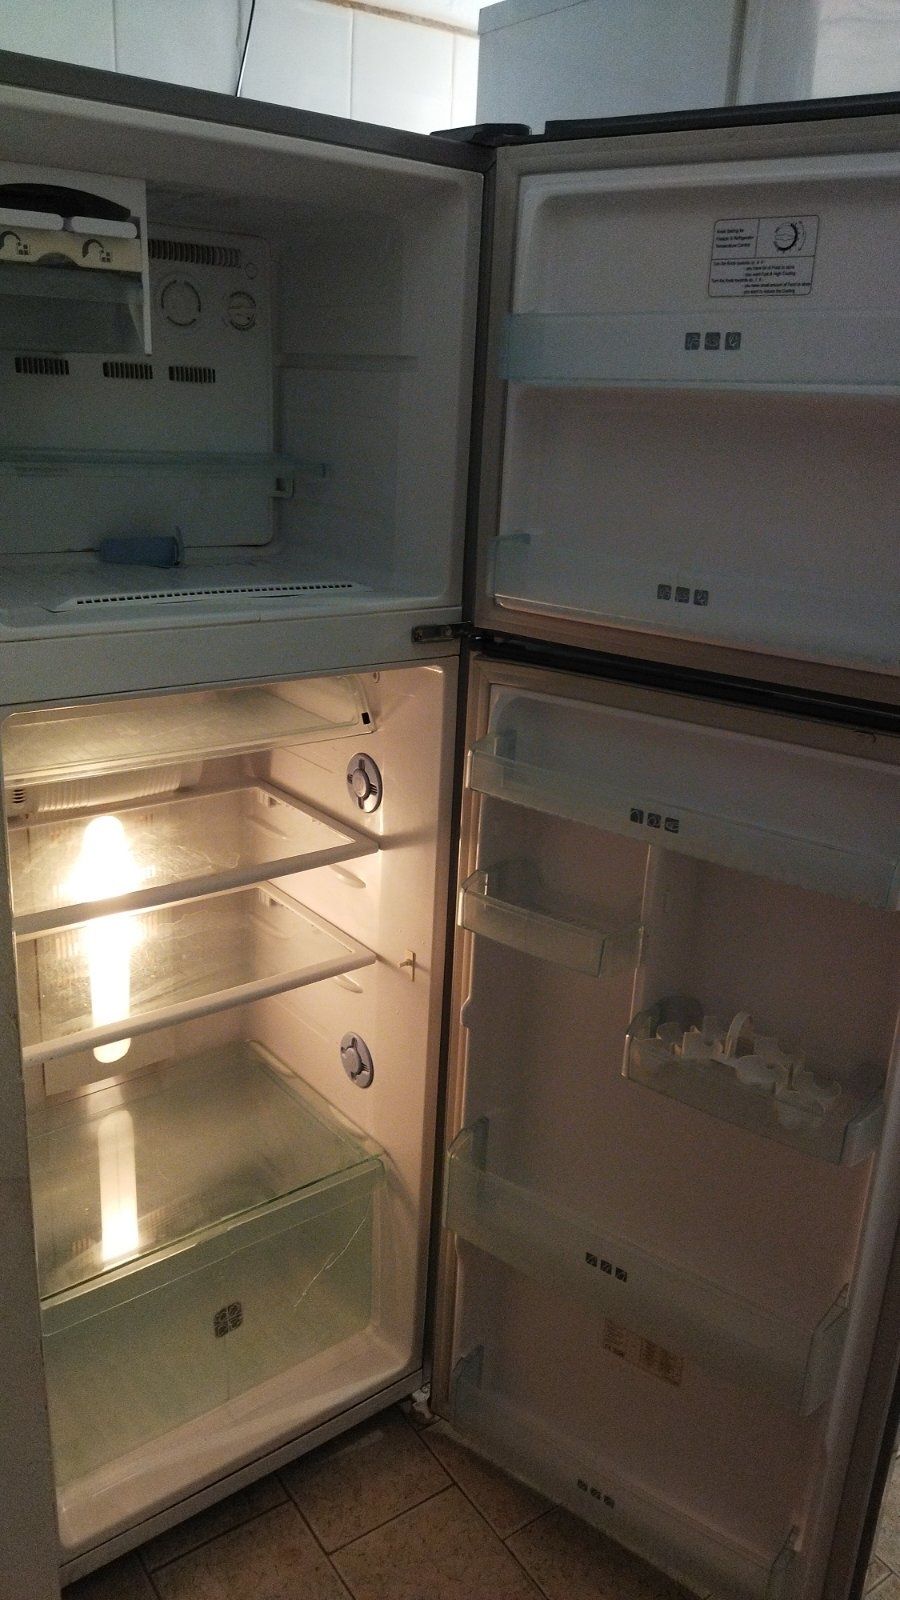 Холодильник бу Киев